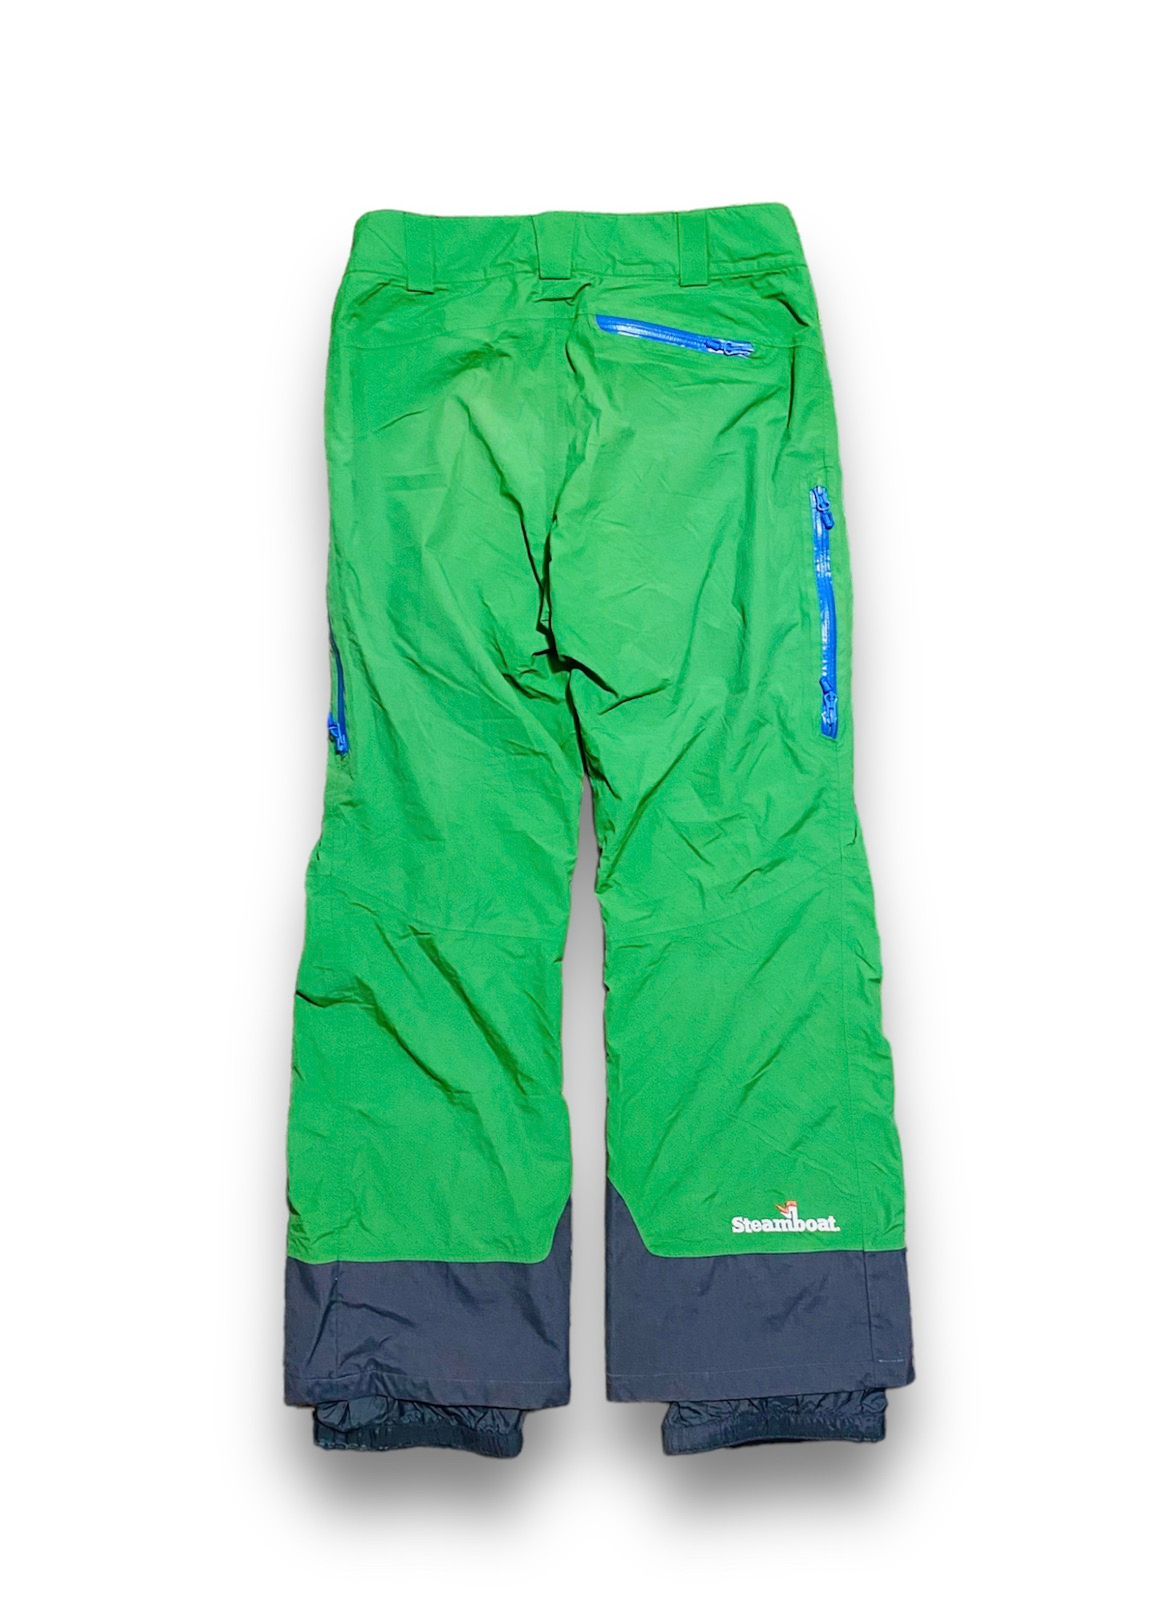 Marmot GTX Pants Trousers Skiing Hiking Outdoor Green Men L - 8